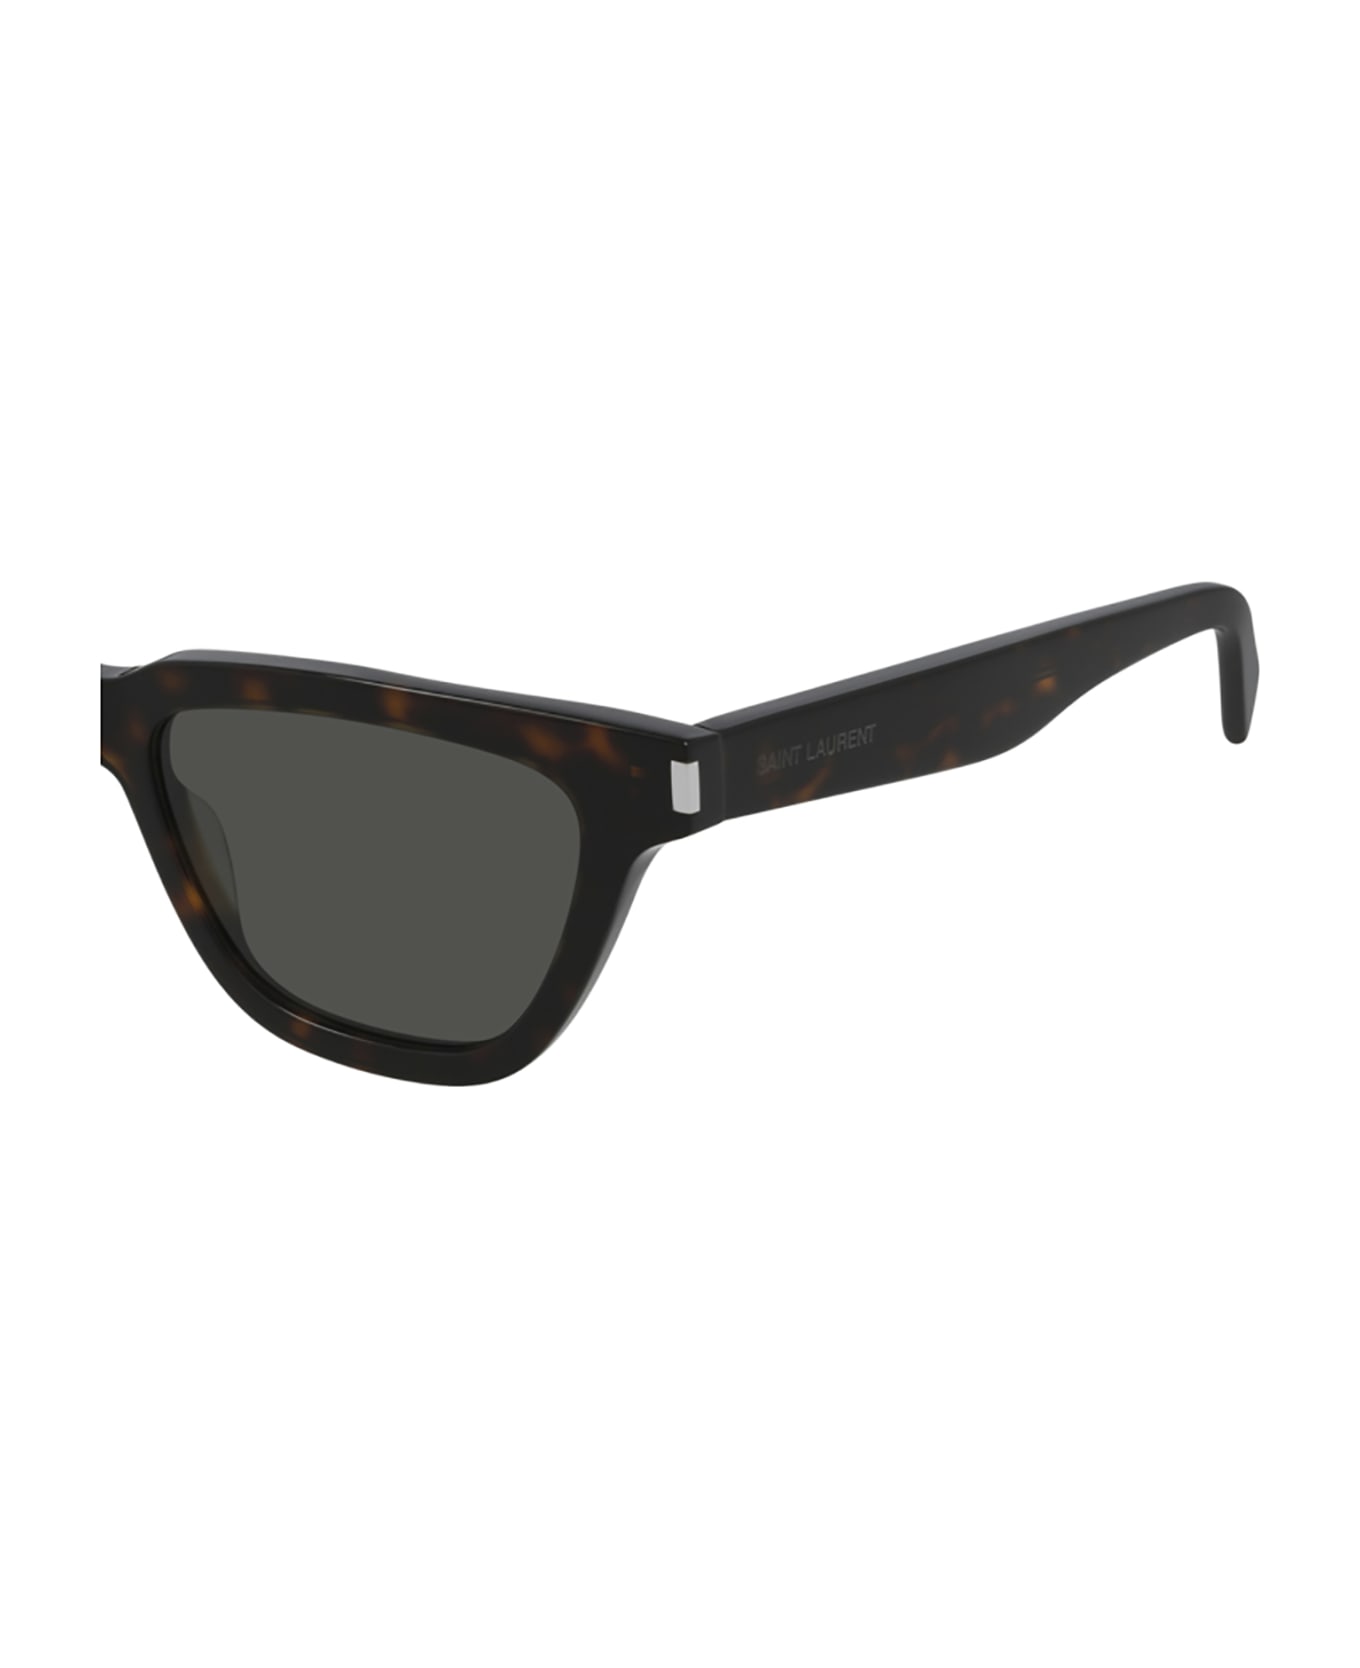 Saint Laurent Eyewear SL 462 SULPICE Sunglasses - Havana Havana Grey